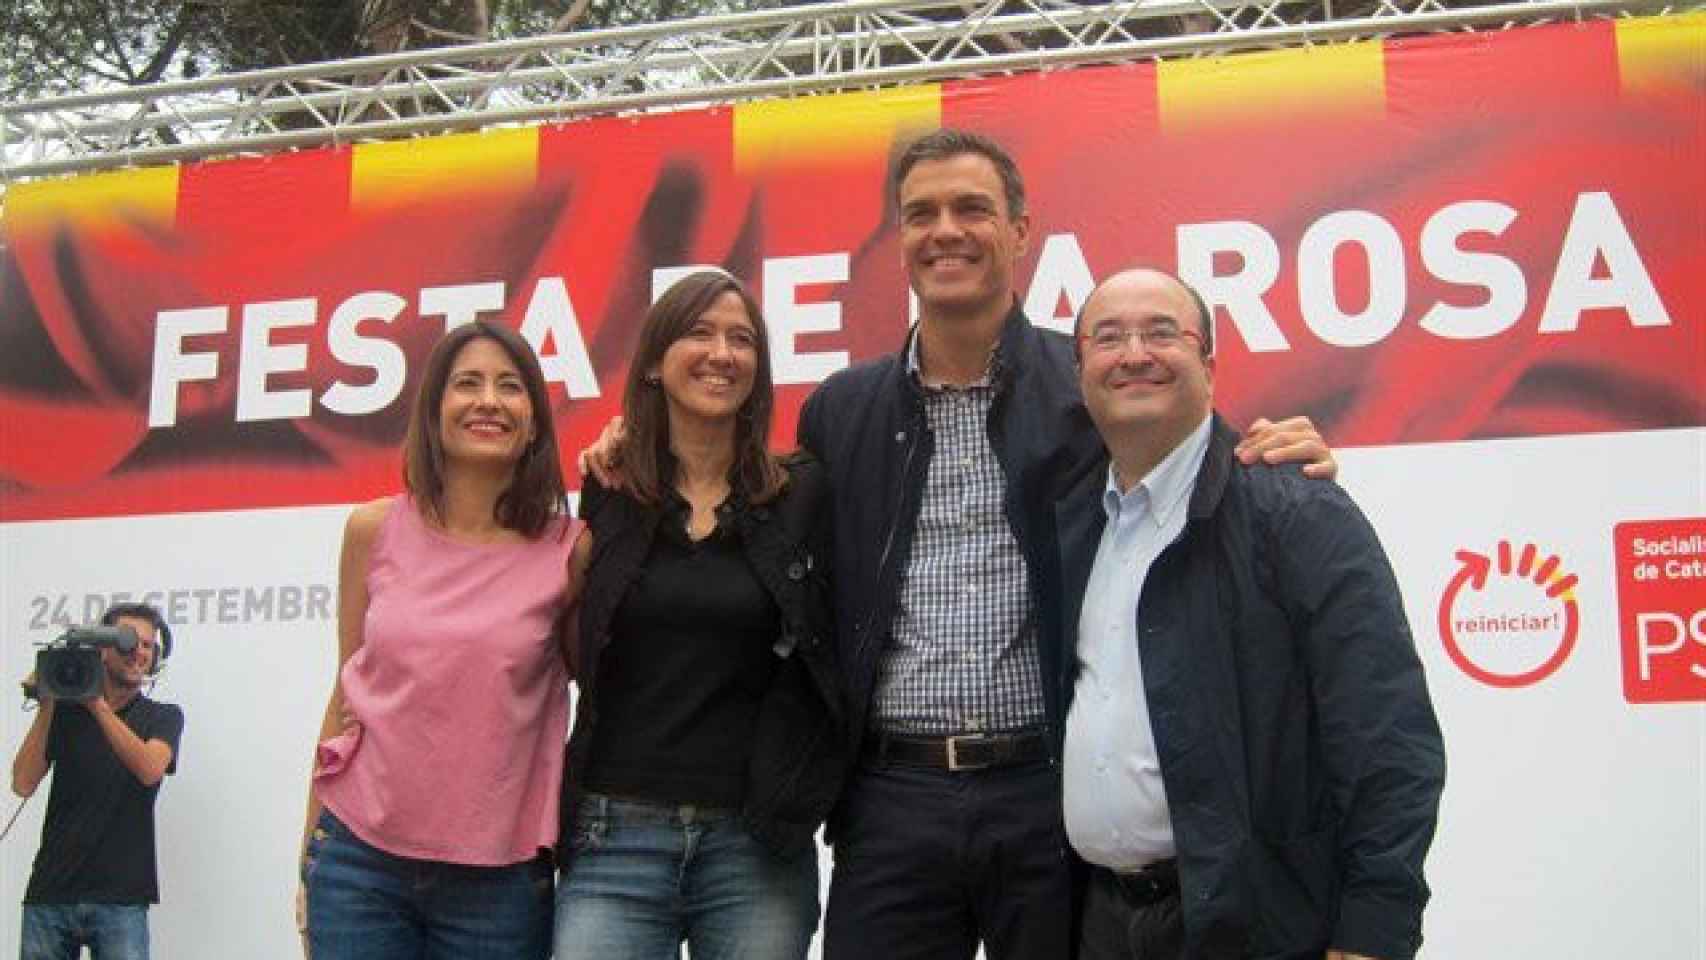 Pedro Sánchez (centro), junto a Miquel Iceta (d), Núria Parlón (i) y la alcaldesa de Gavà, Raquel Sánchez, en la Fiesta de la Rosa del PSC / EP